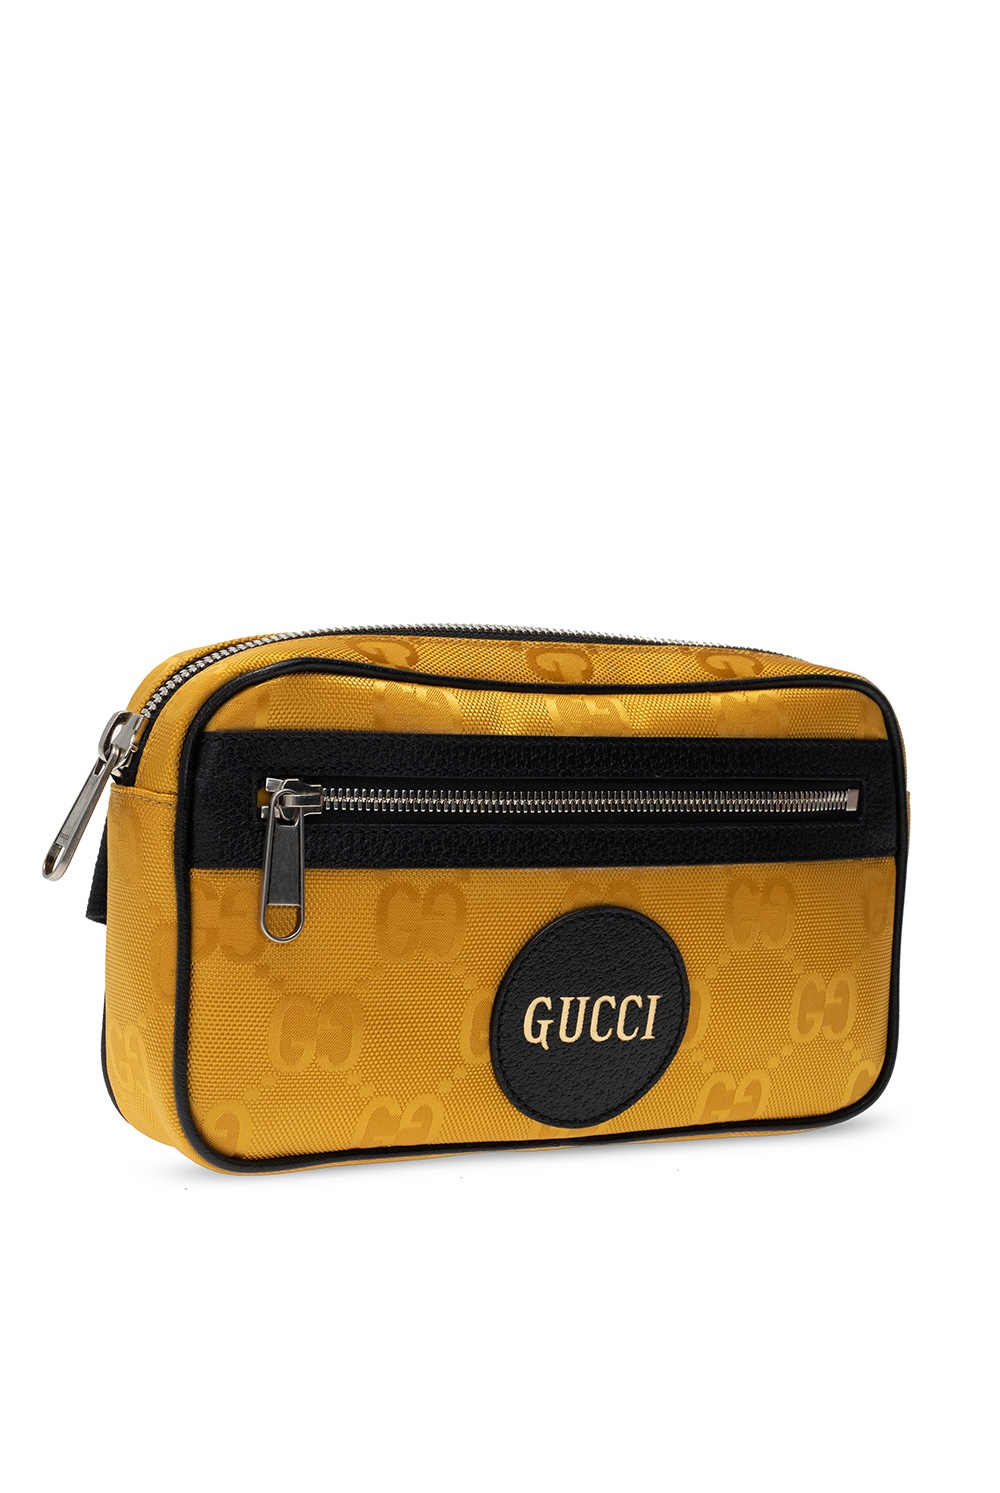 black and yellow gucci belt bag